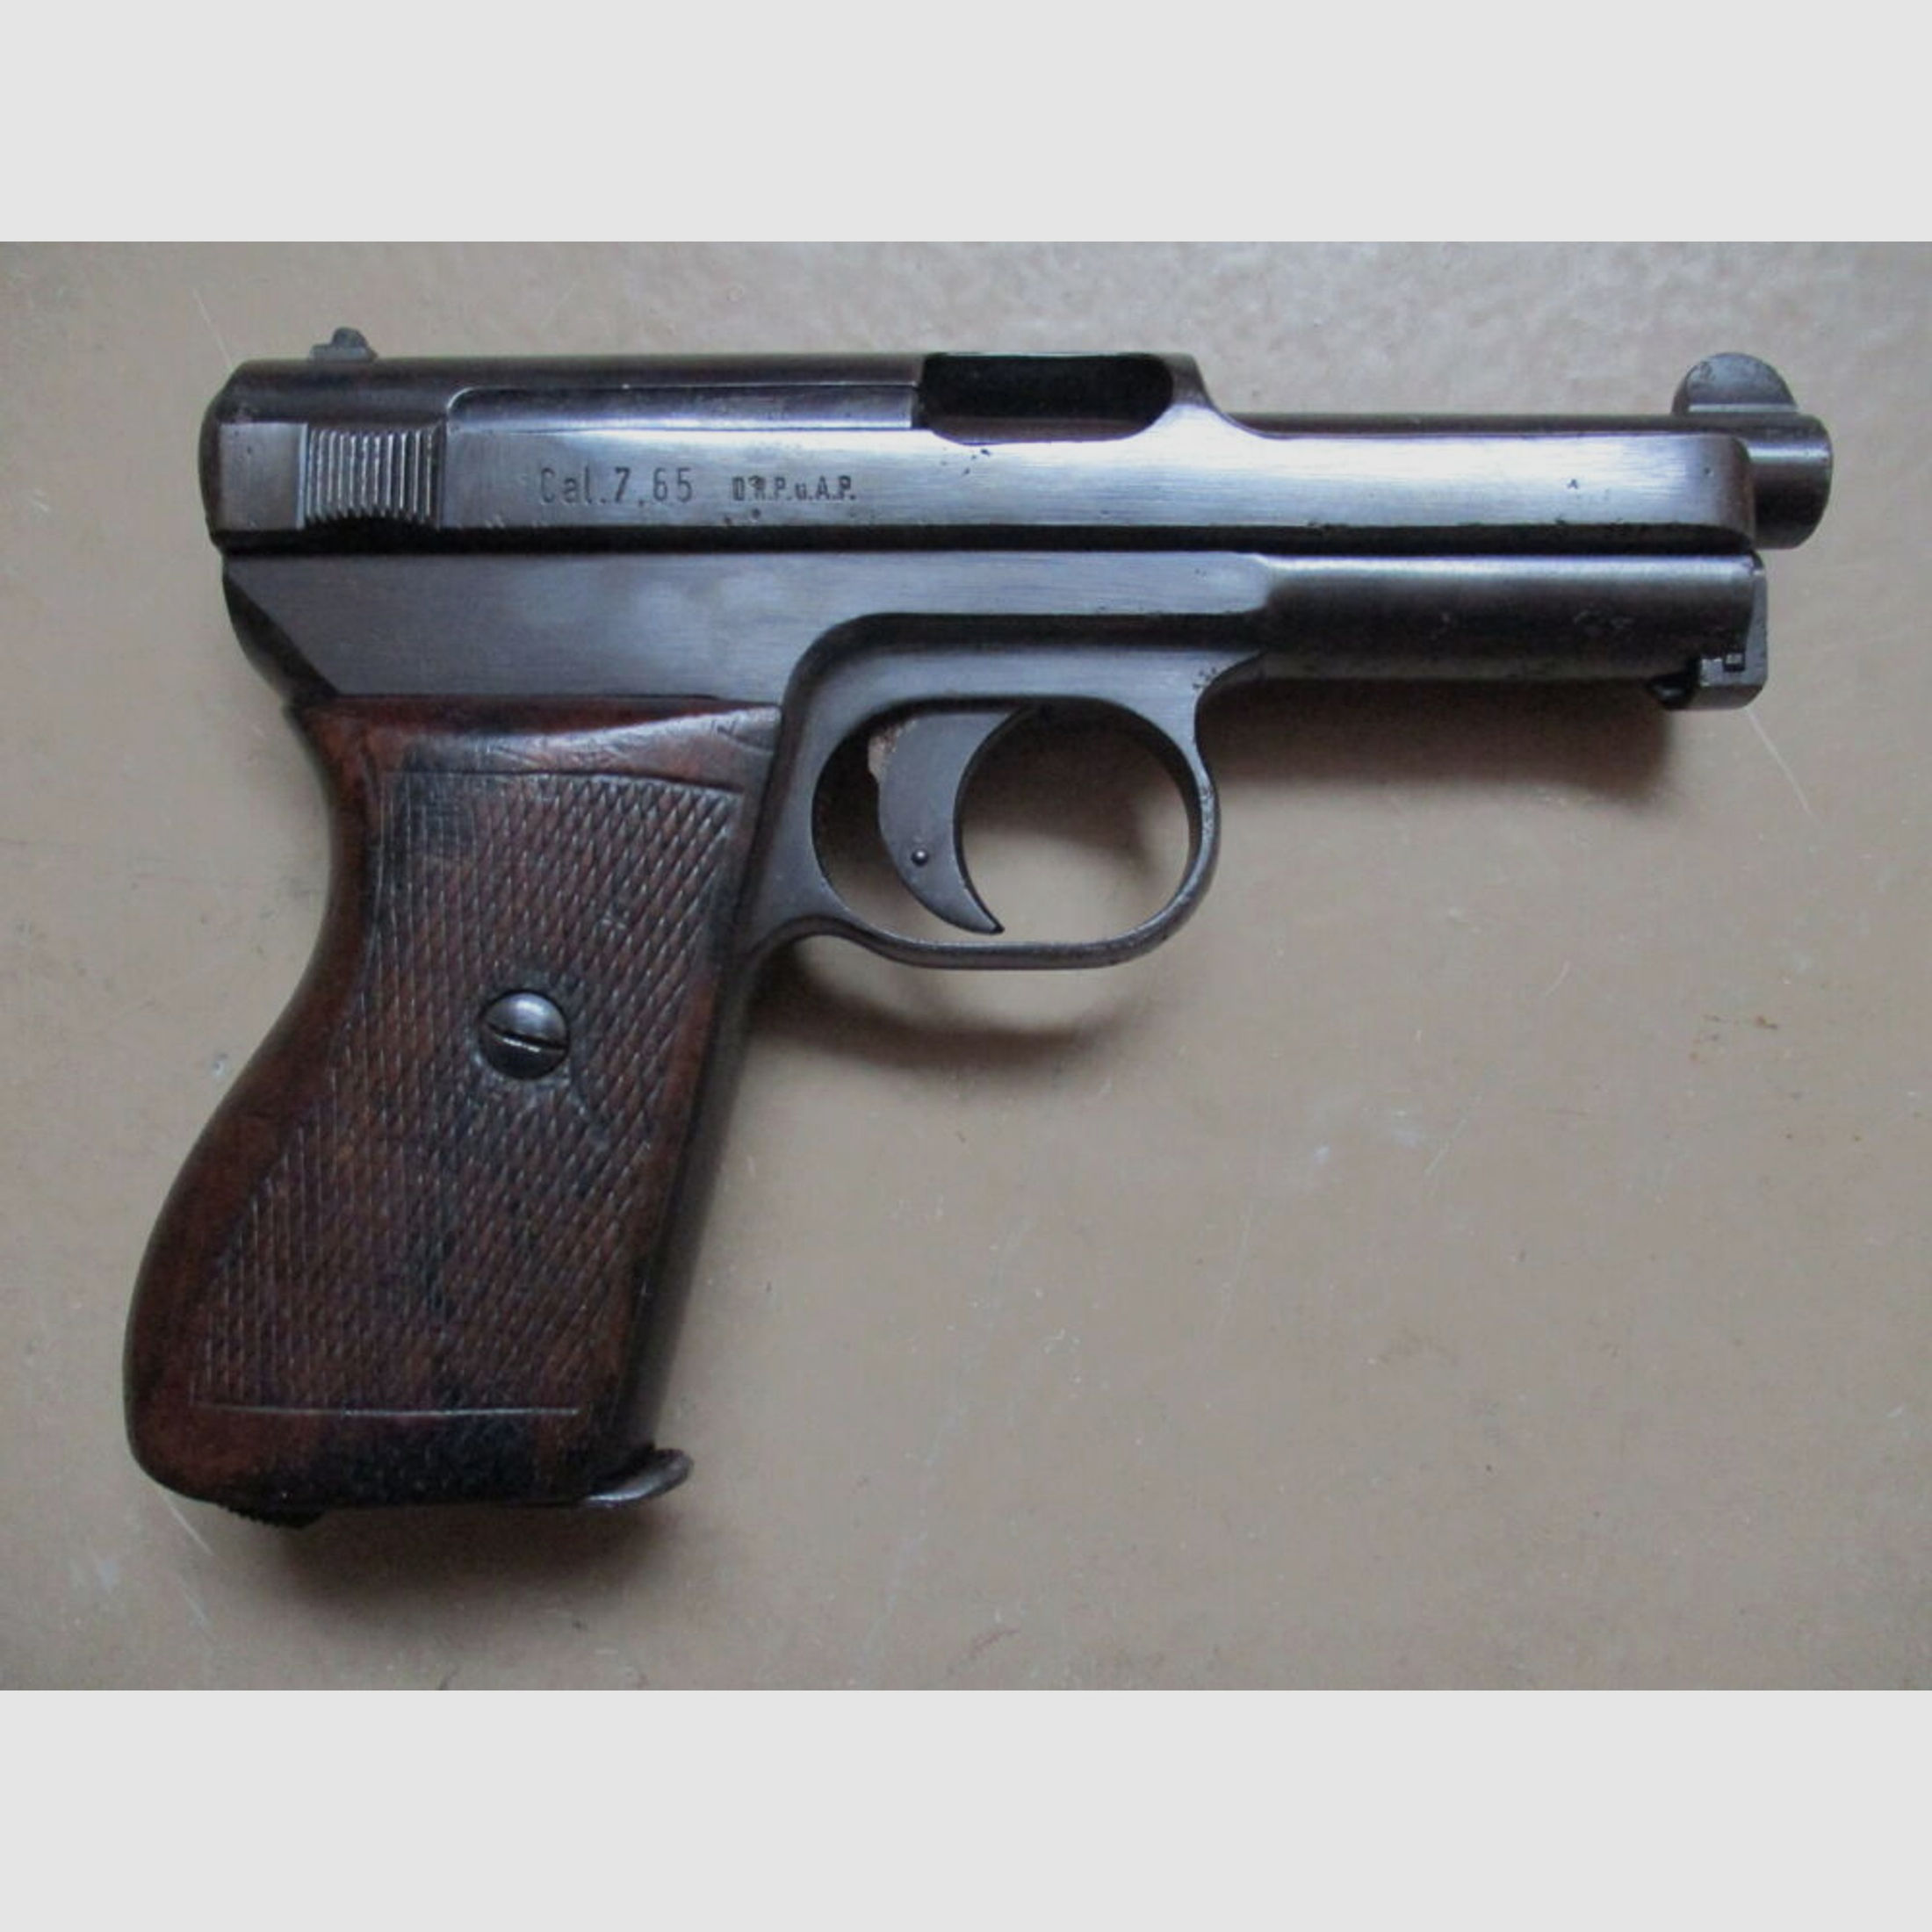 Pistole Mauser Modell 1910/14